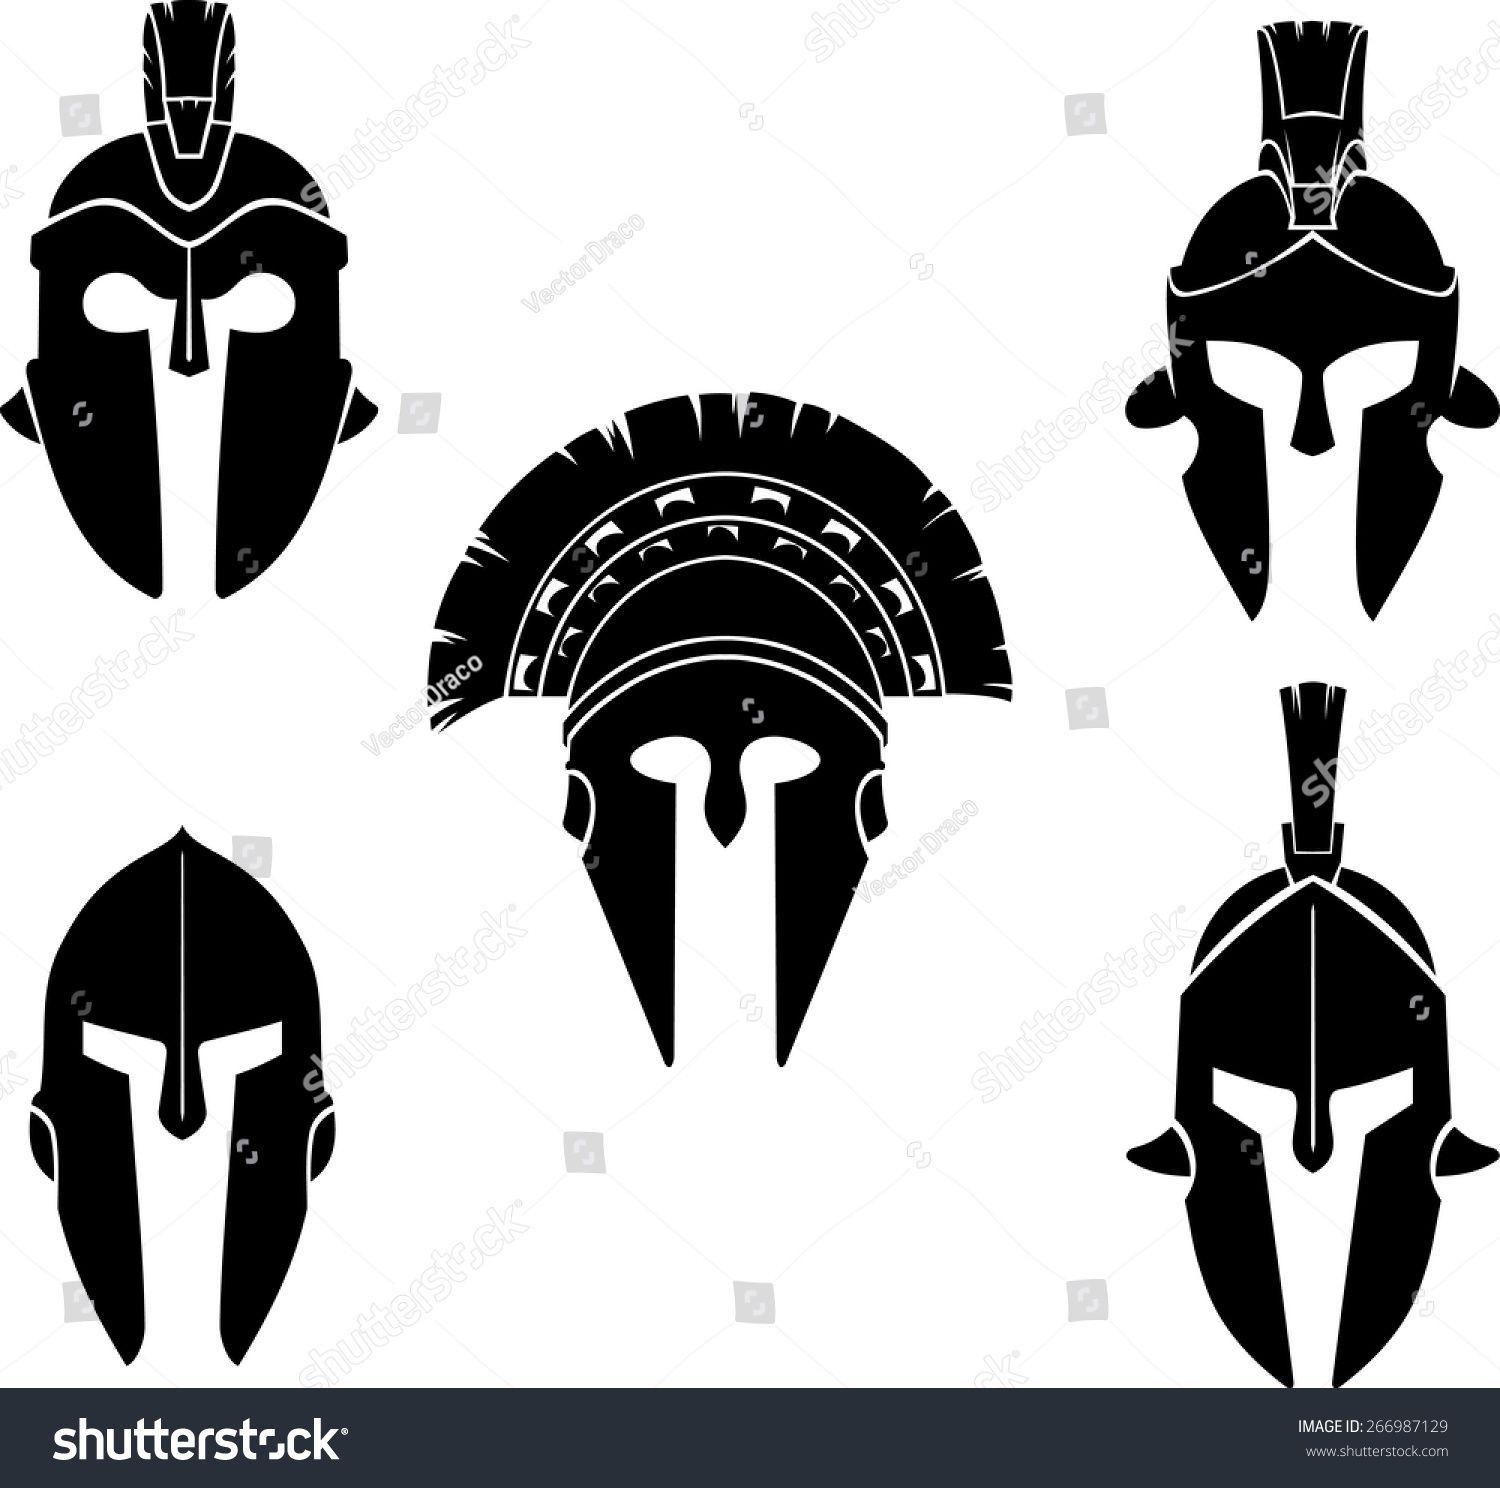 Spartan Warrior Helmet Logo - Spartan Helmet Silhouette Set. Tattoos. Spartan helmet